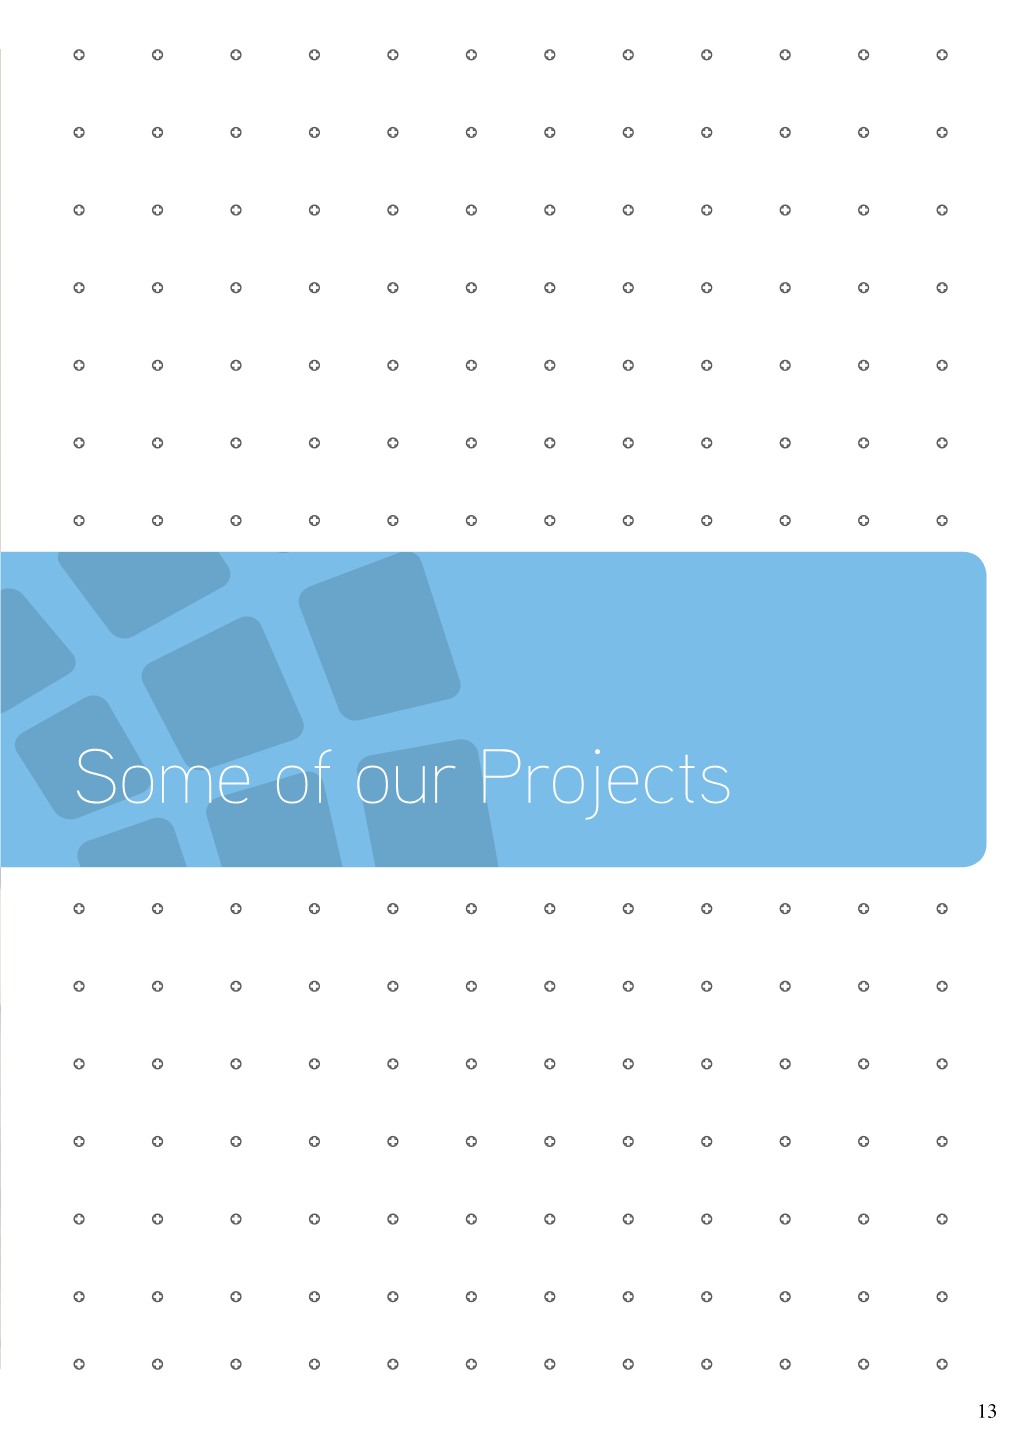 ASP Project List 2012